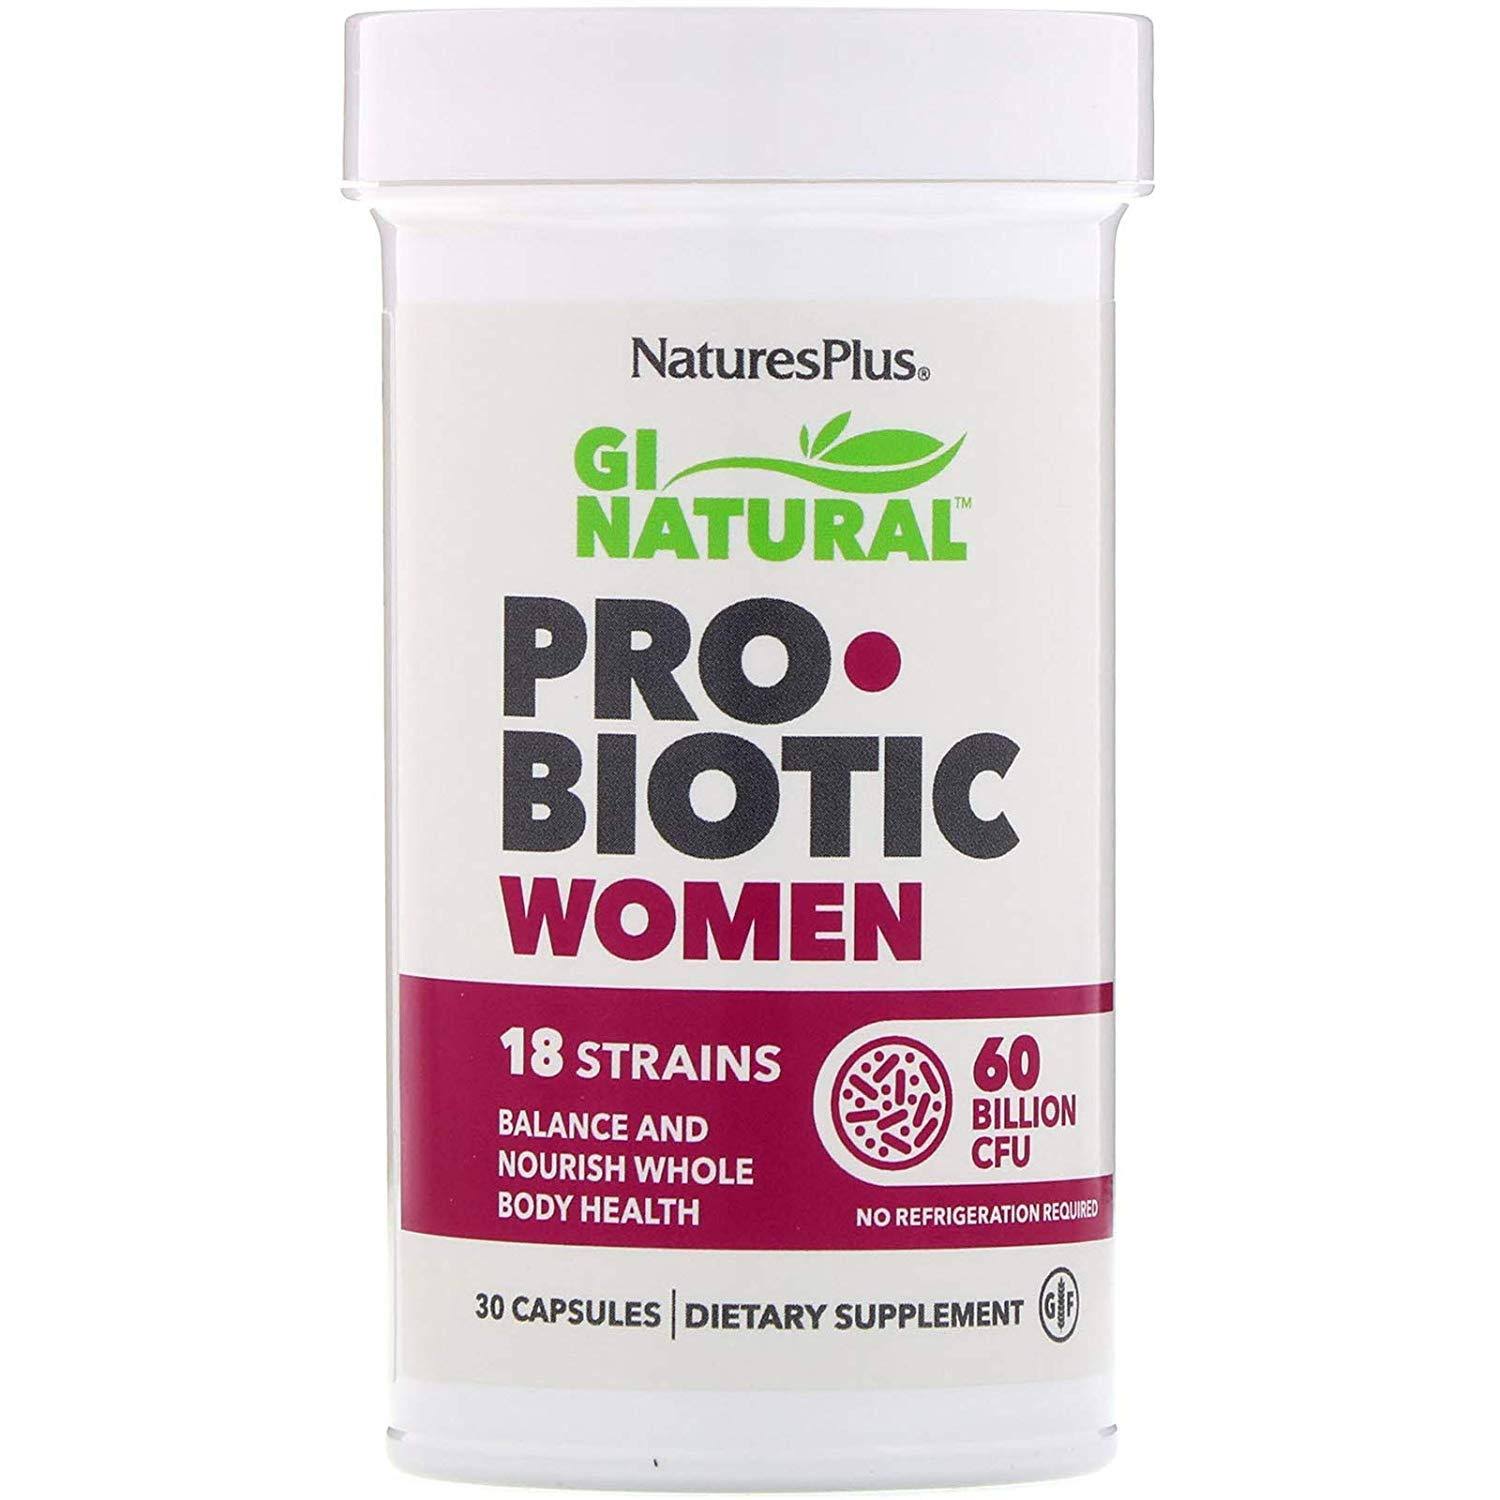 Nature's Plus - GI Natural Probiotic Women - 30 Capsules